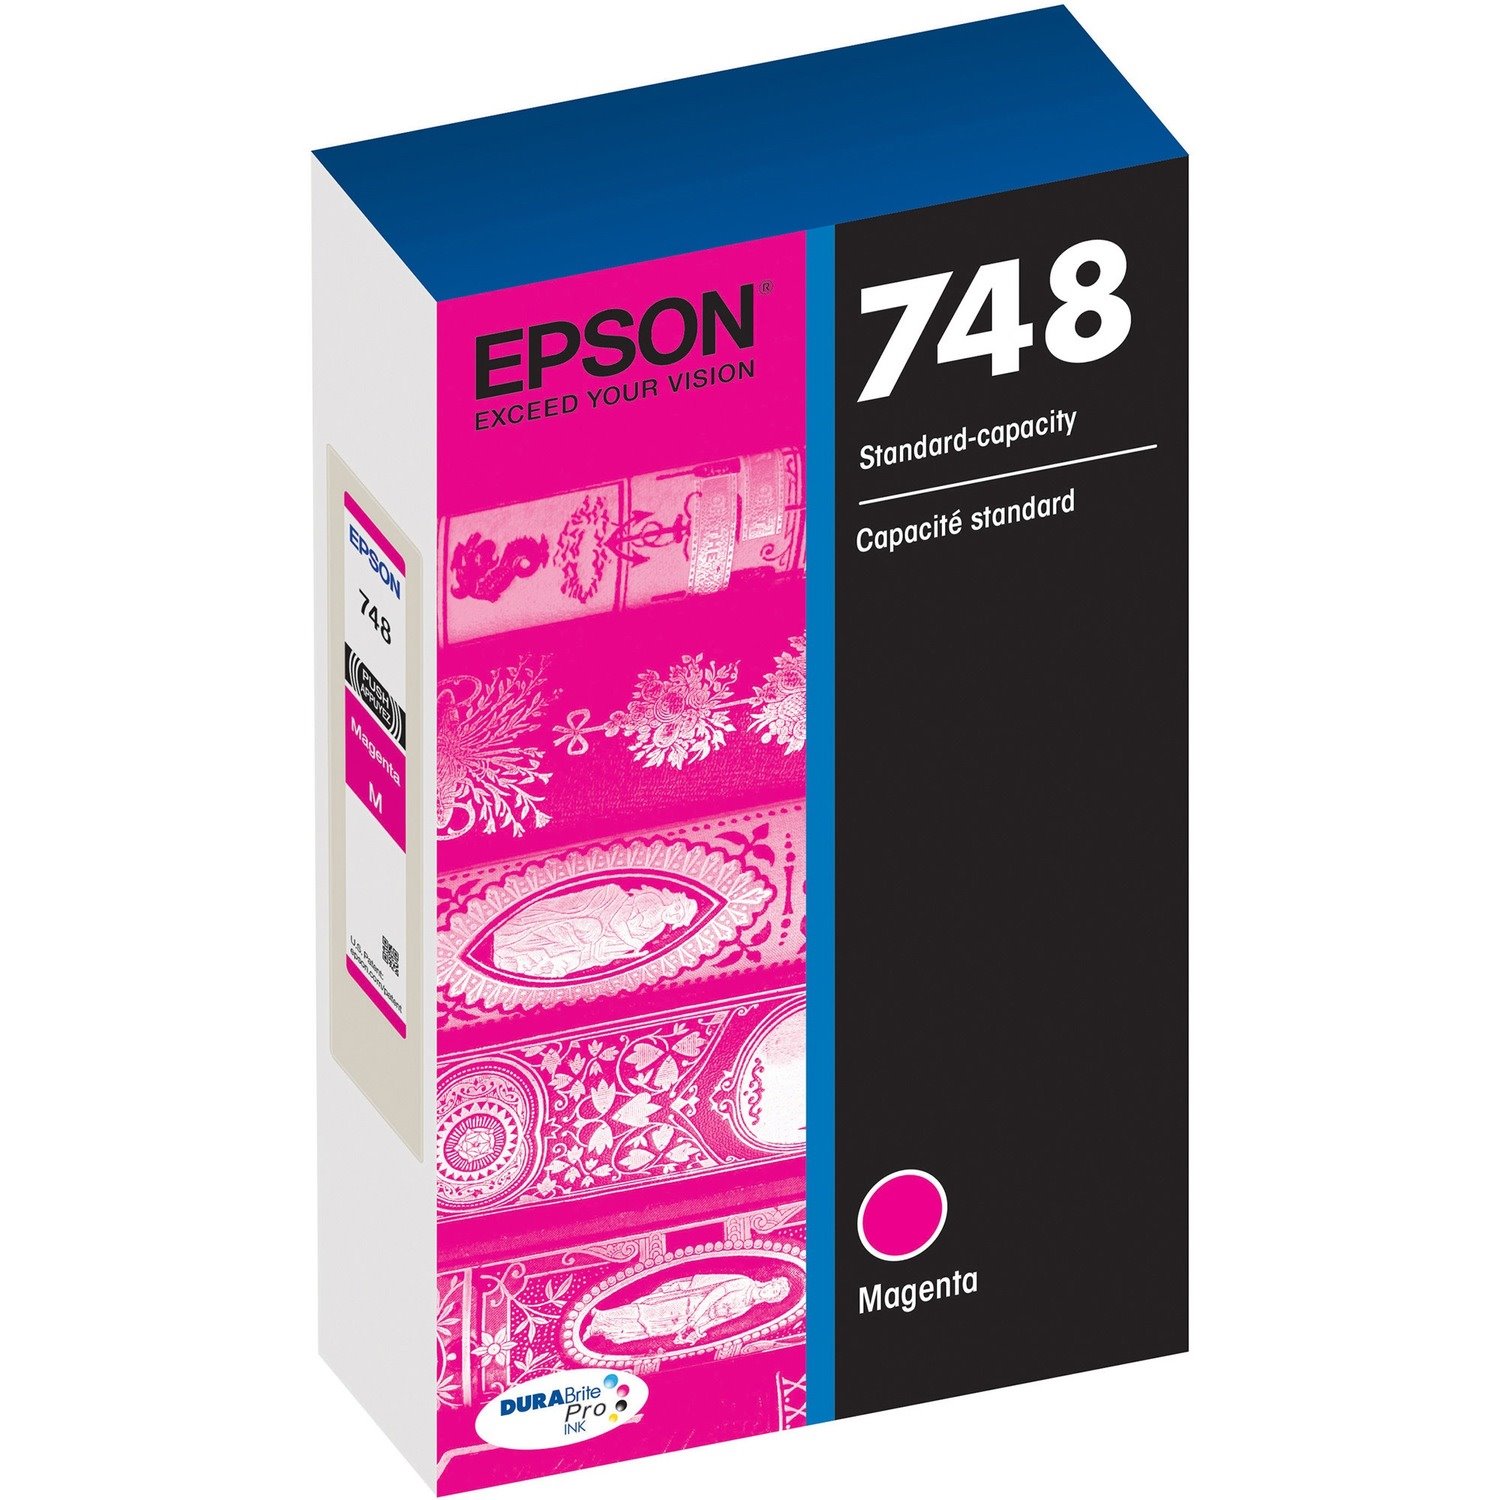 Epson DURABrite Pro 748 Original Standard Yield Inkjet Ink Cartridge - Magenta - 1 Each